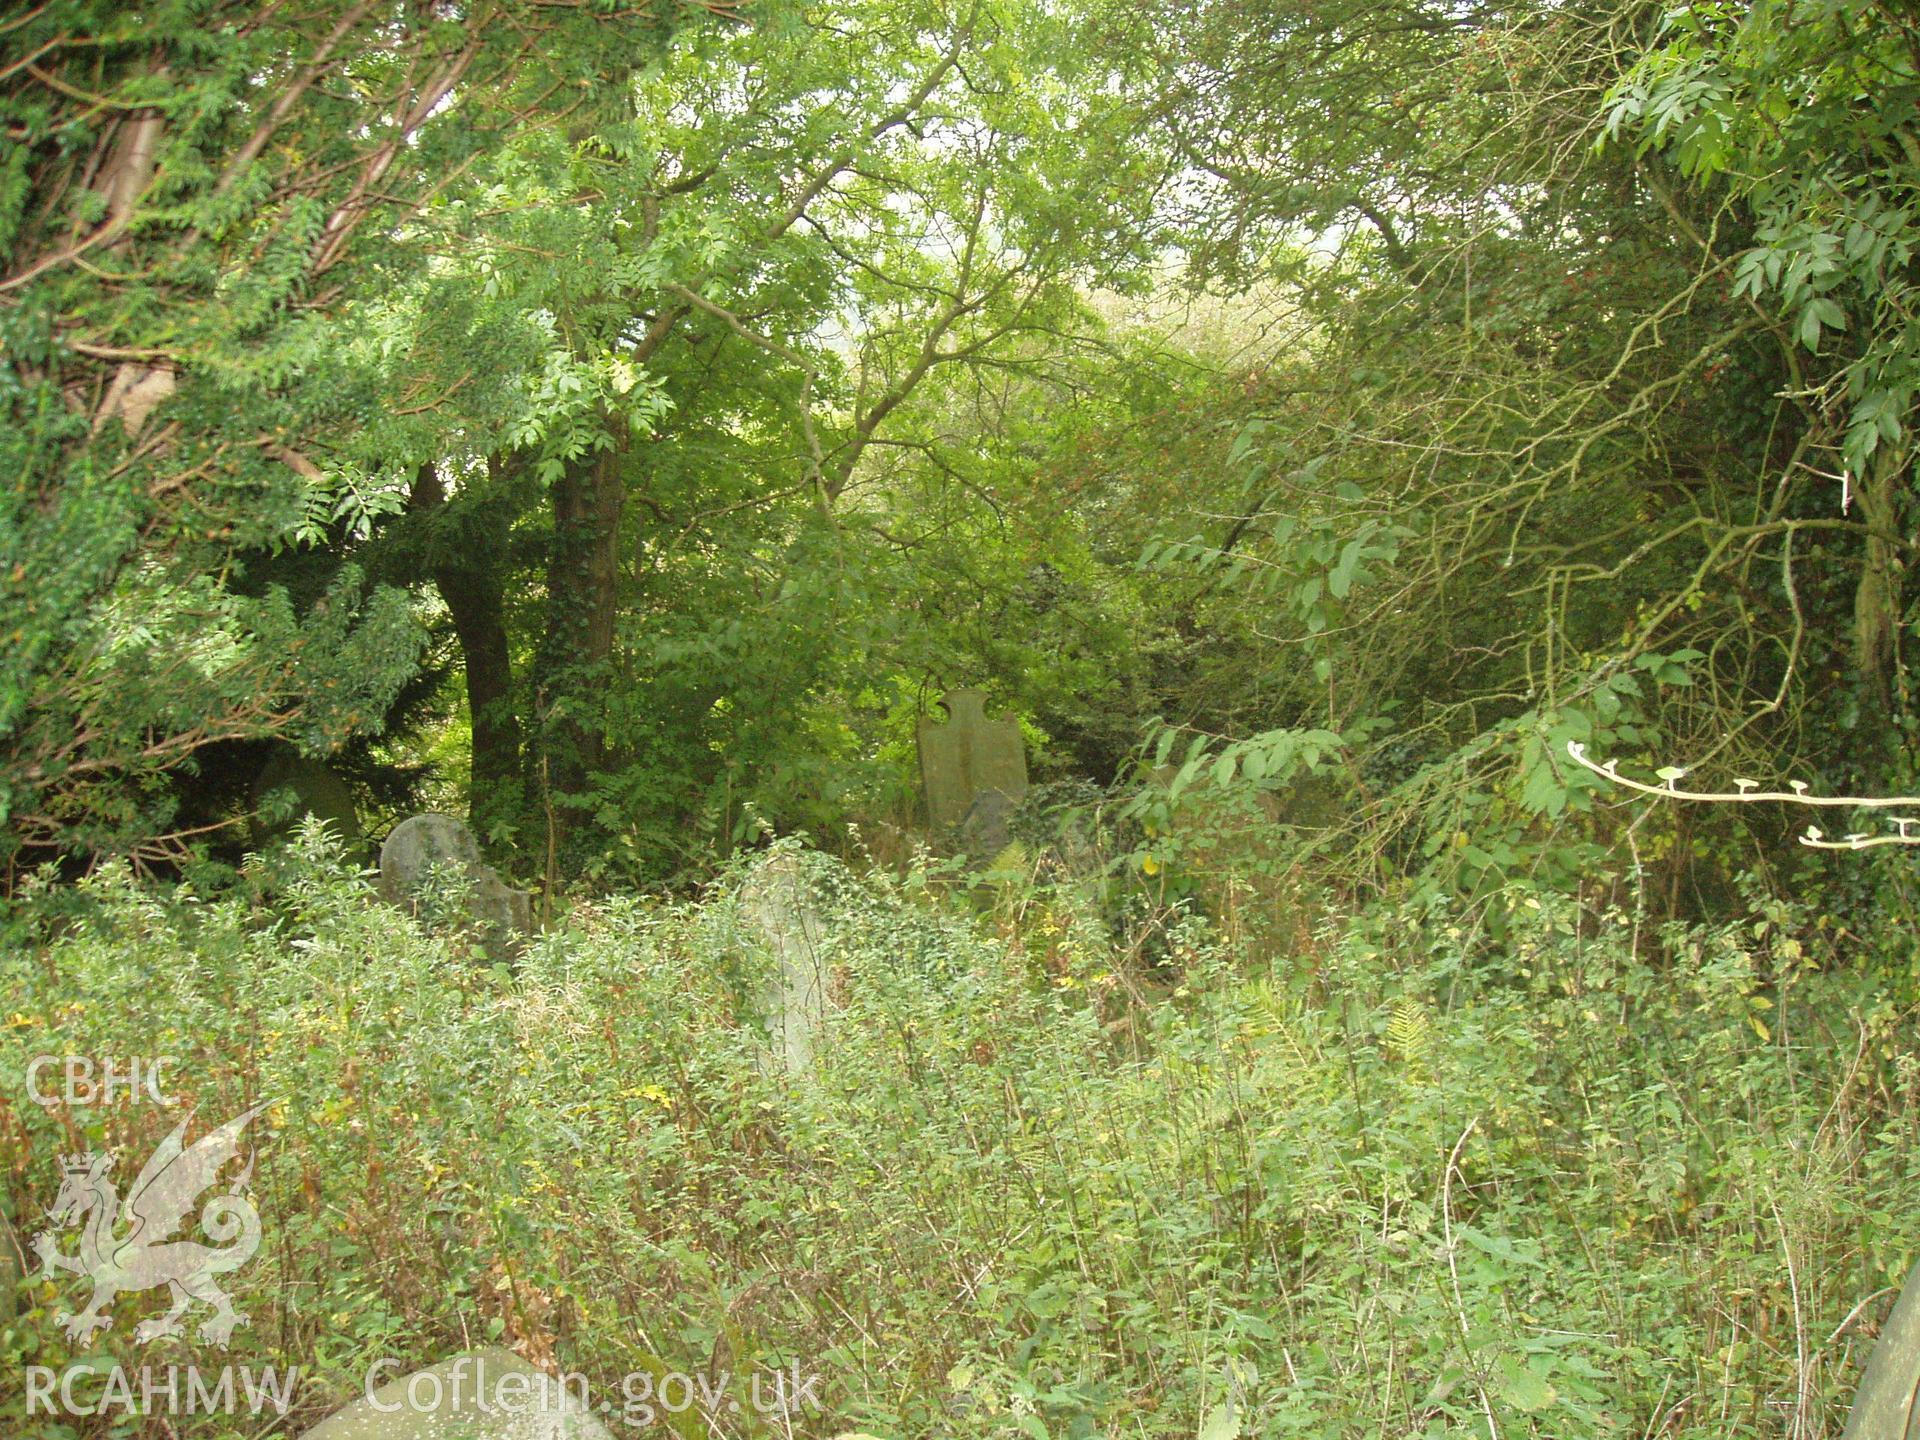 Bryn Seion Chapel, digital colour photograph showing exterior, graveyard.